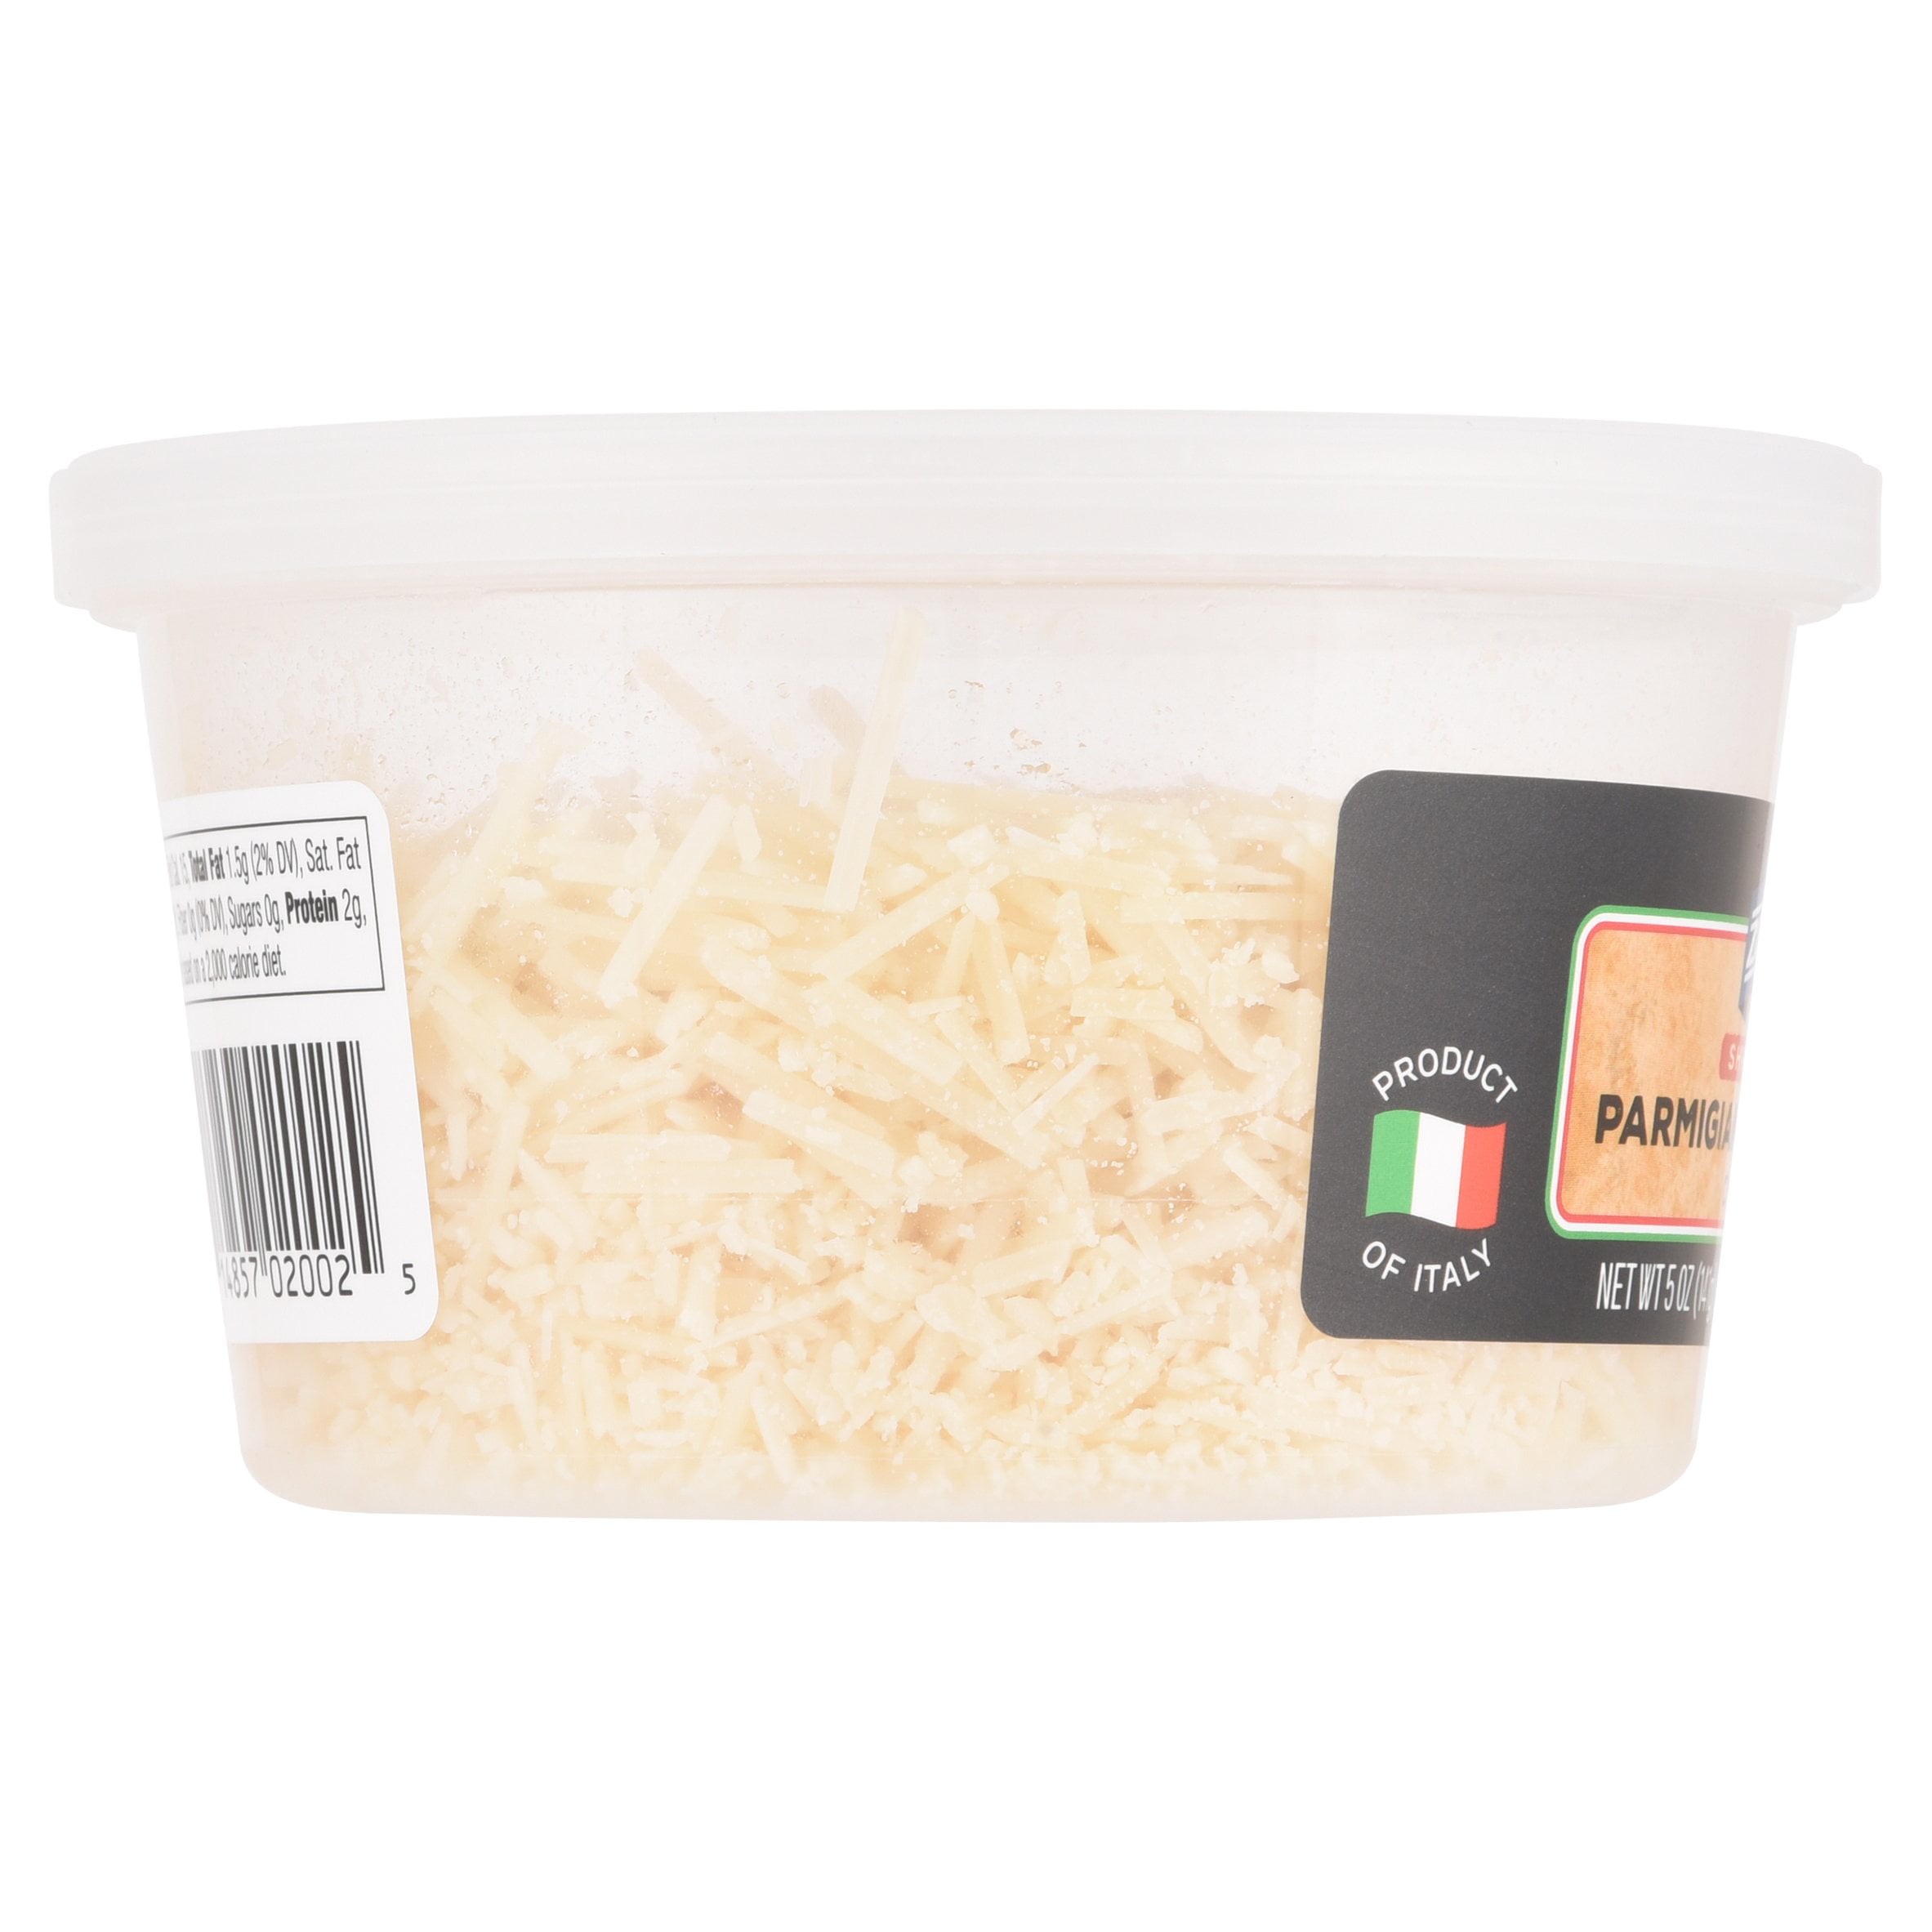 Zanetti Shredded Parmigiano Reggiano Cheese 5 Oz Walmart Com Walmart Com,Hydrangeas In Vase